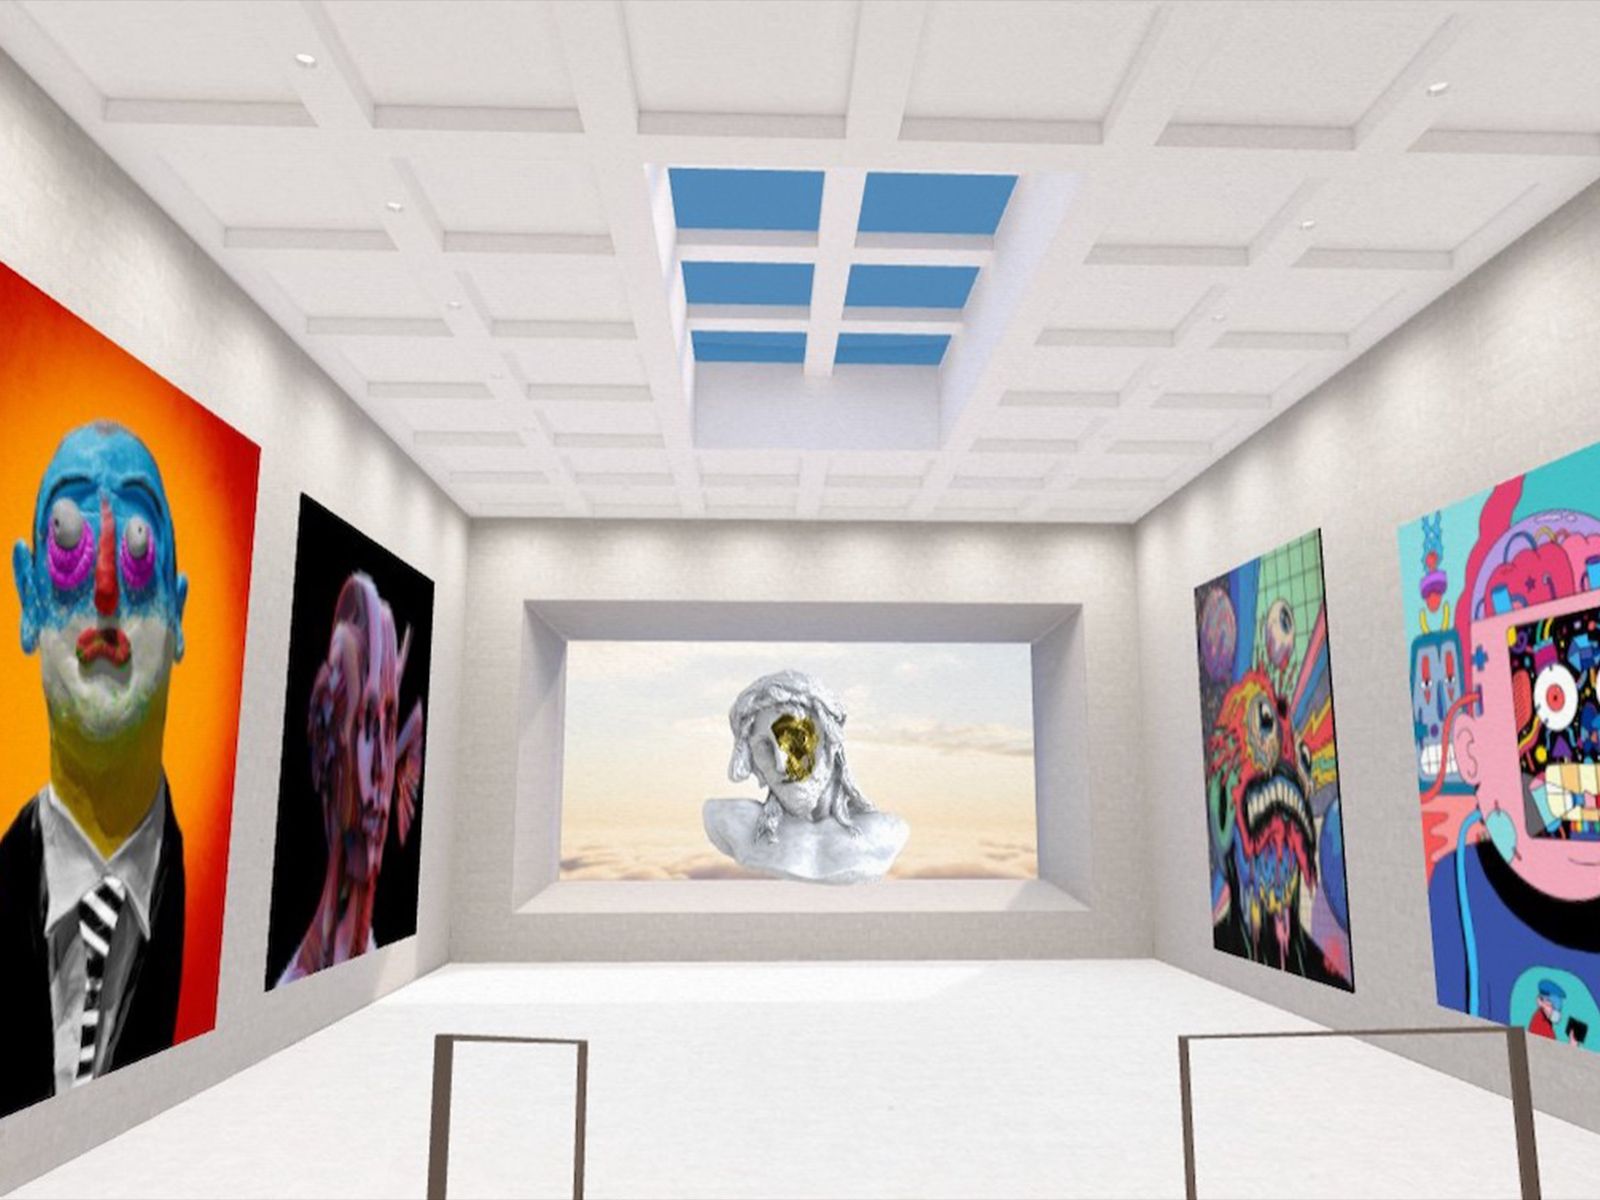 OD Hotels unveils its NFT art gallery